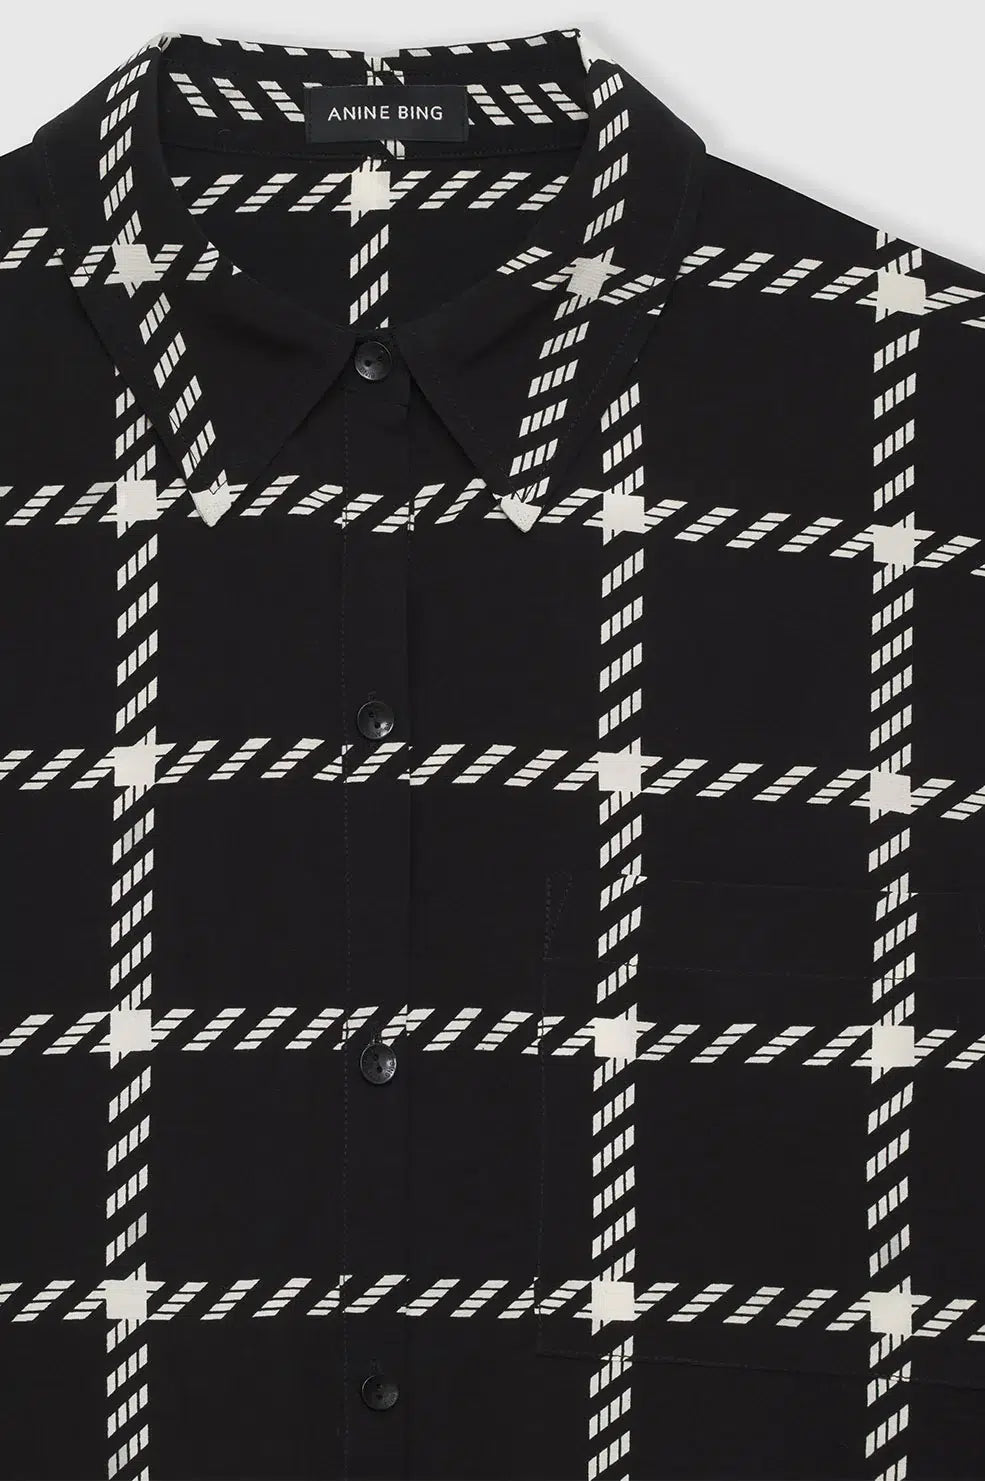 trinity-chemise-aspen-black-and-white-anine-bing